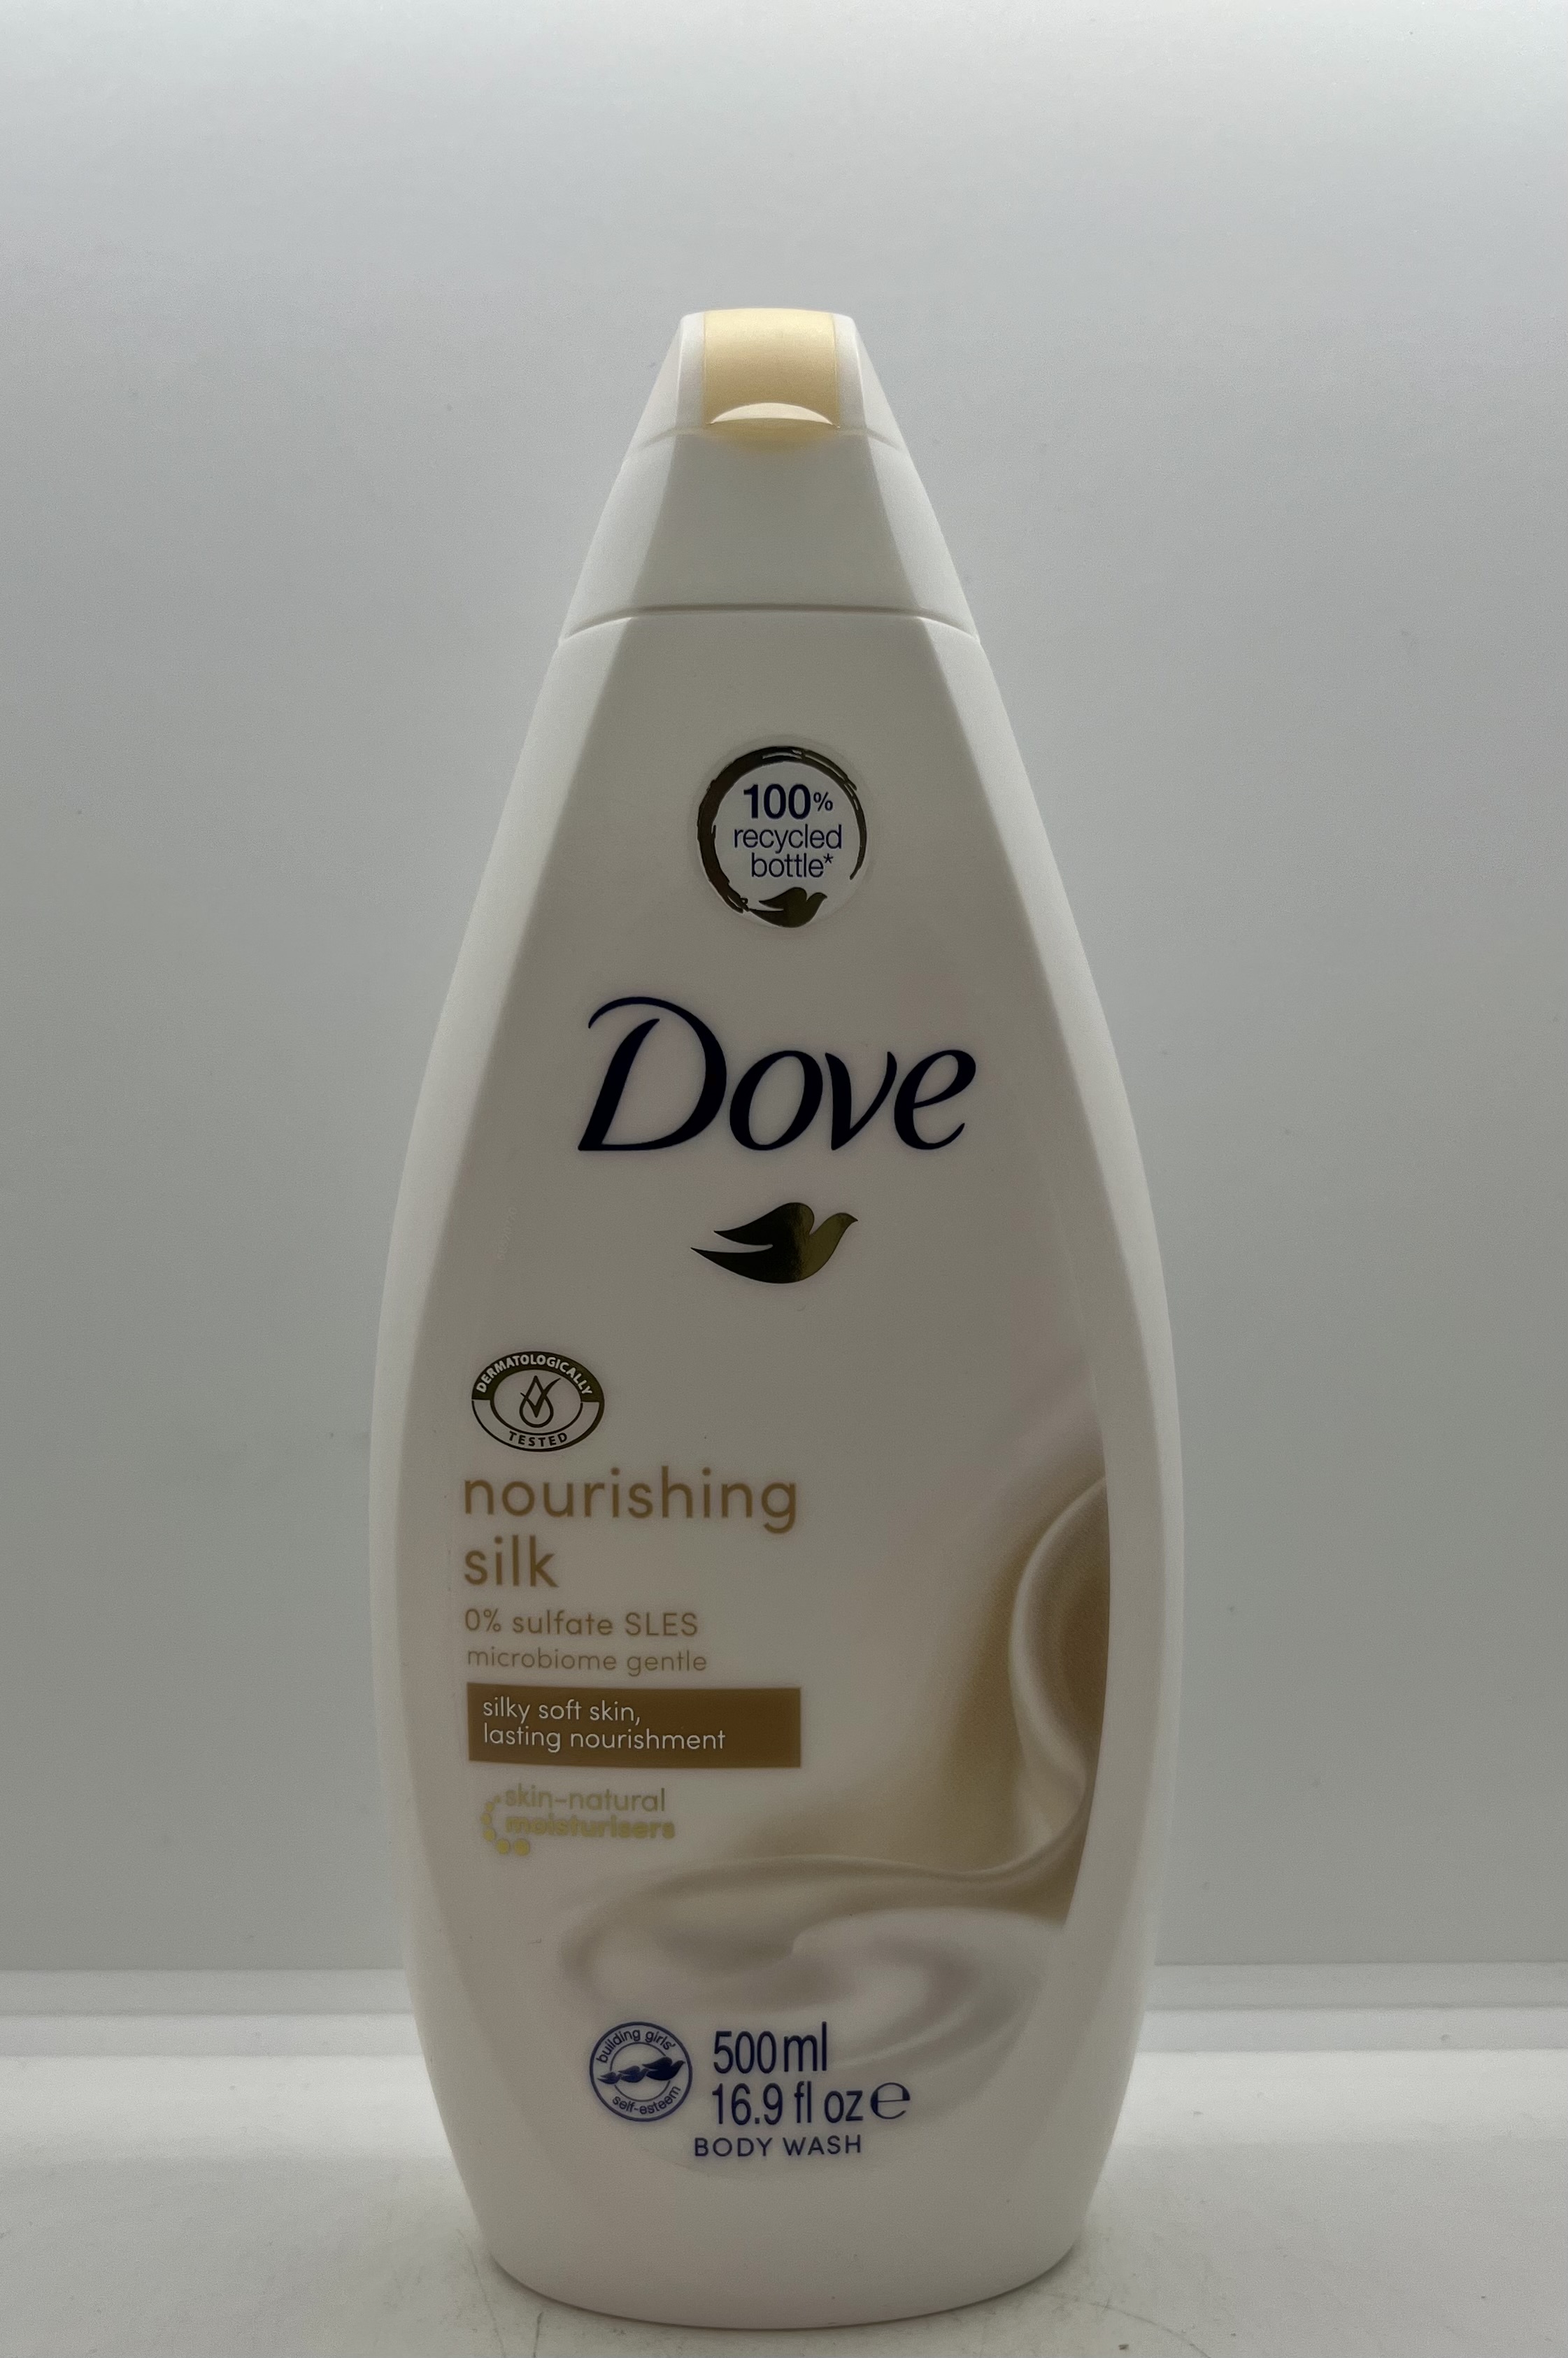 Dove Nourishing Silk Body Wash 500ml - Gala Apple Grocery and Produce